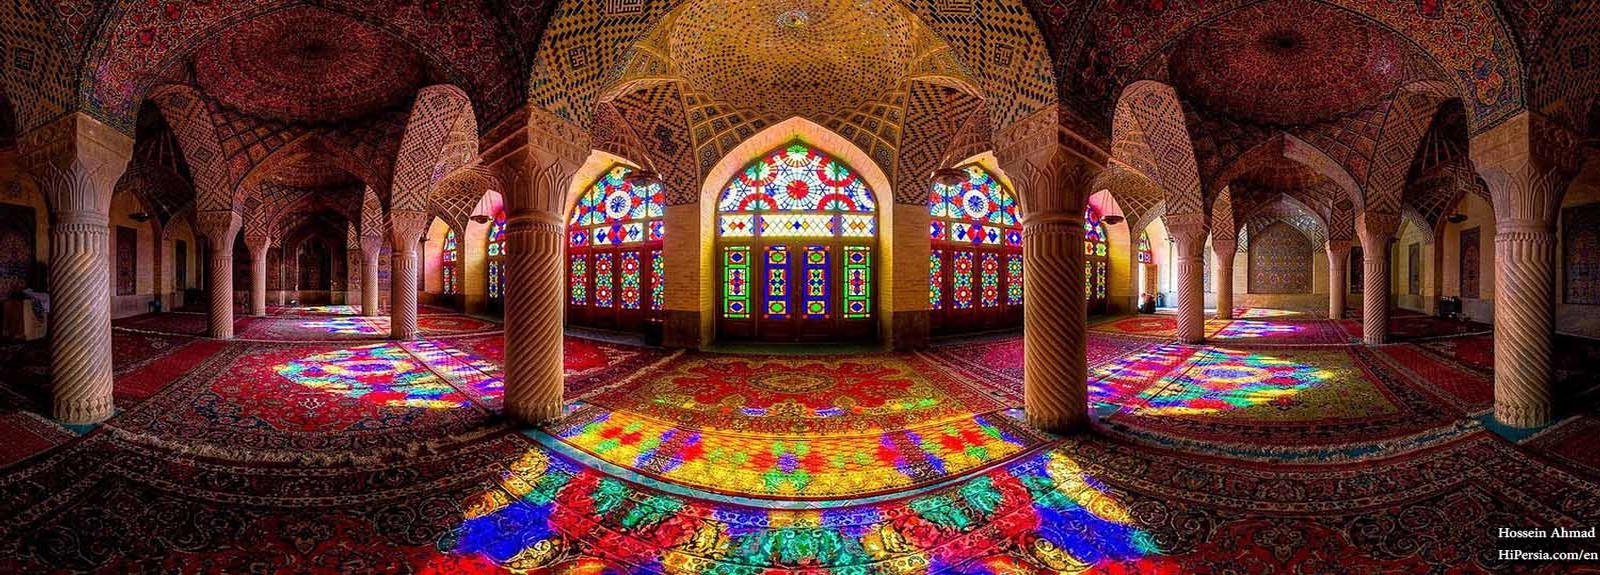 Visit the rainbow of colors in Nasir al Mulk Mosque!